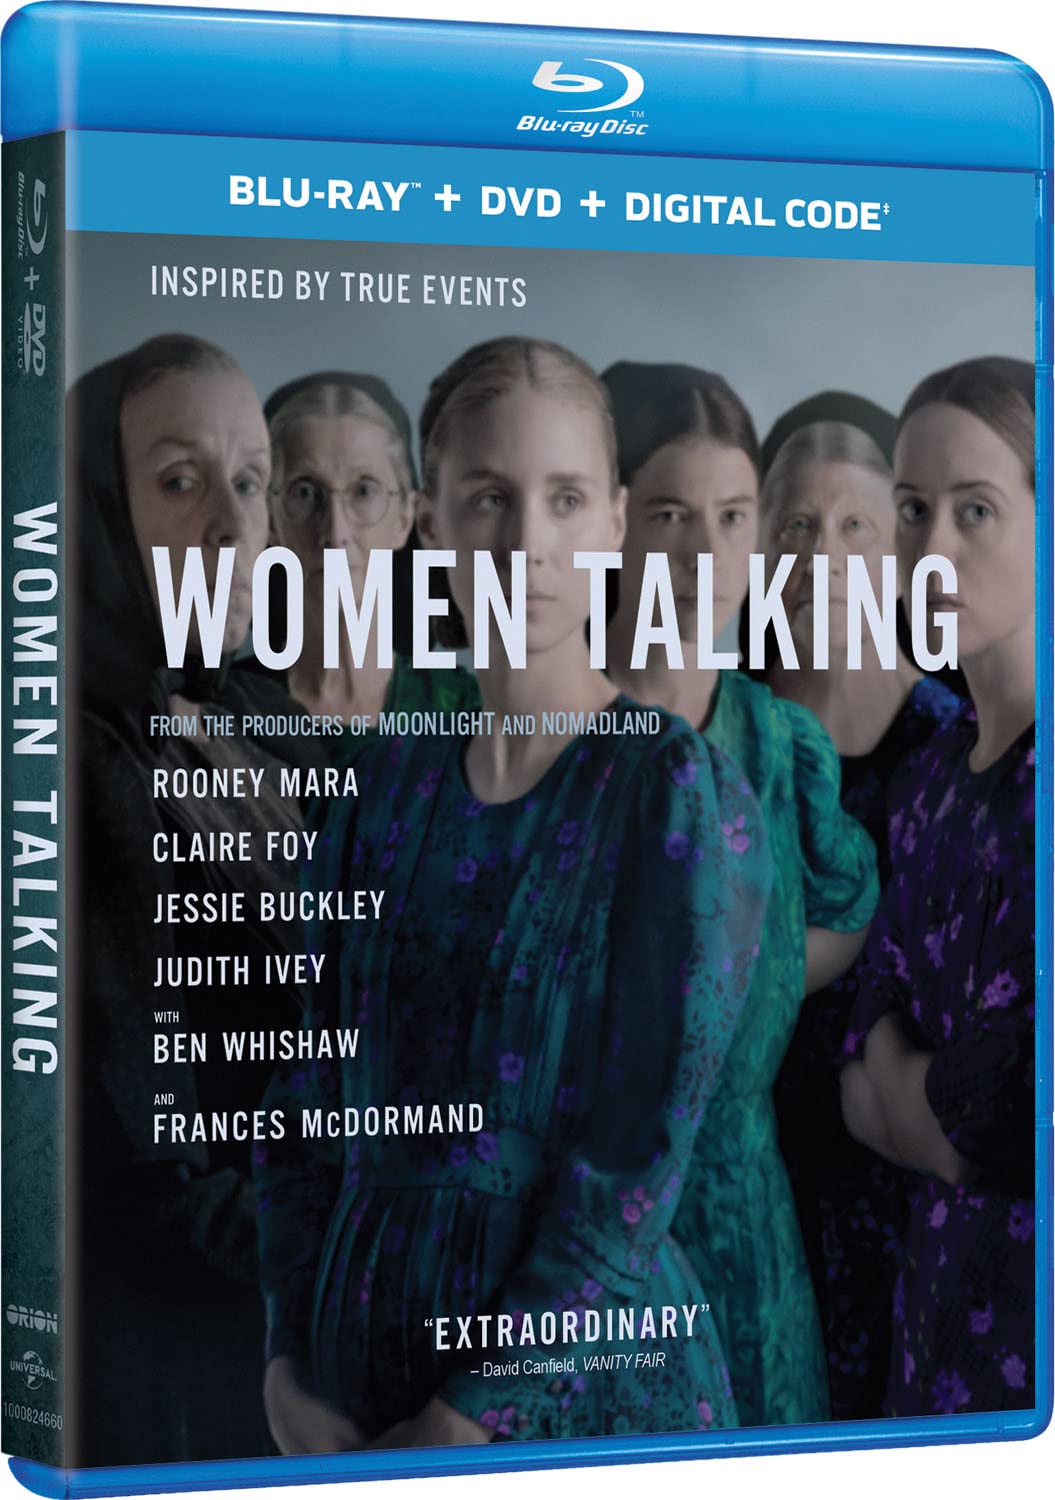 Women Talking - Blu-ray + DVD + Digital